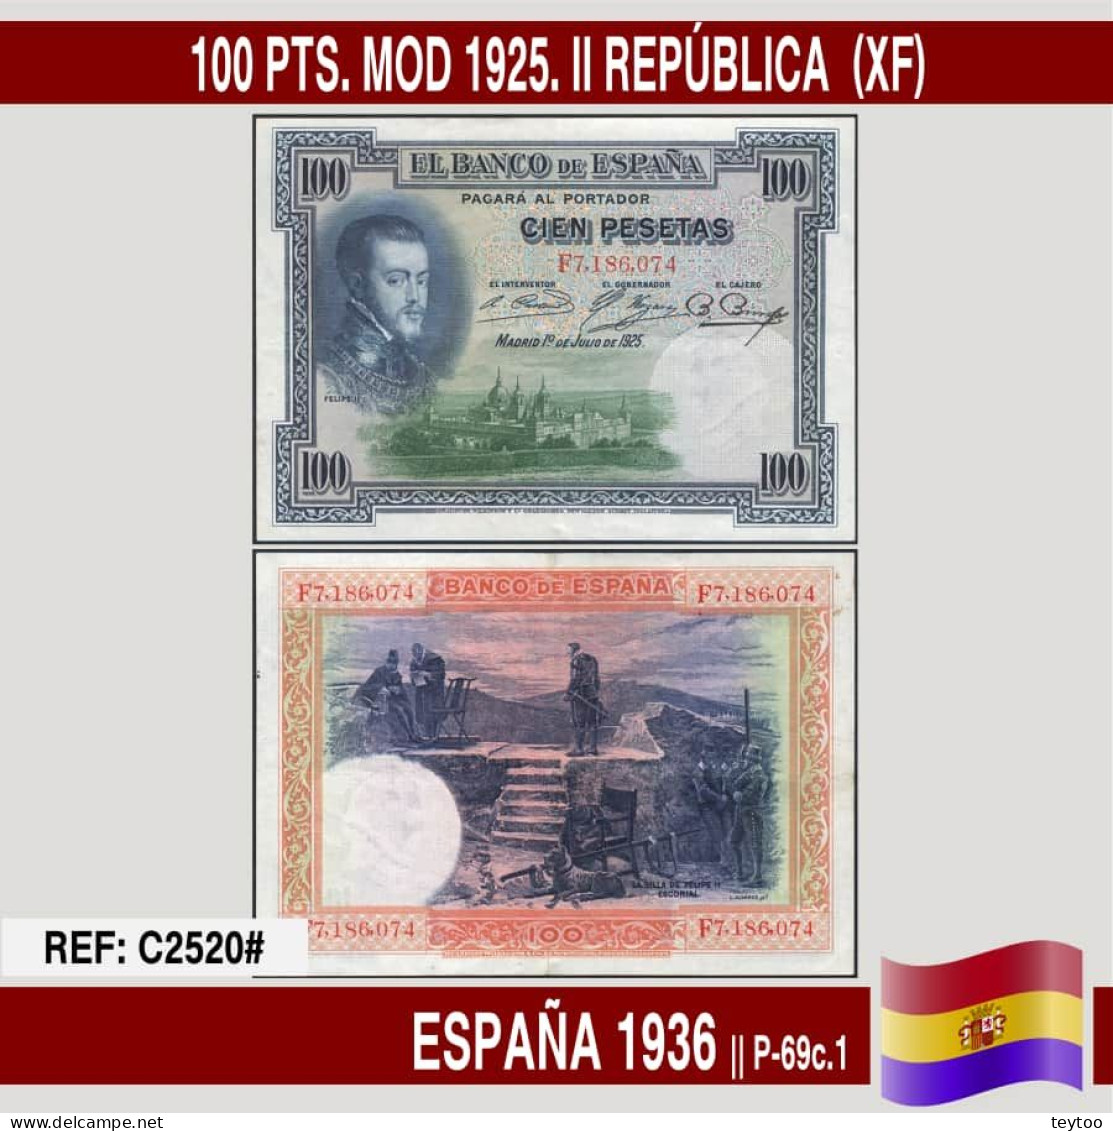 C2520# España 1936. 100 Pts. Mod. 1925. II República (XF) P-69c.1 - 100 Pesetas